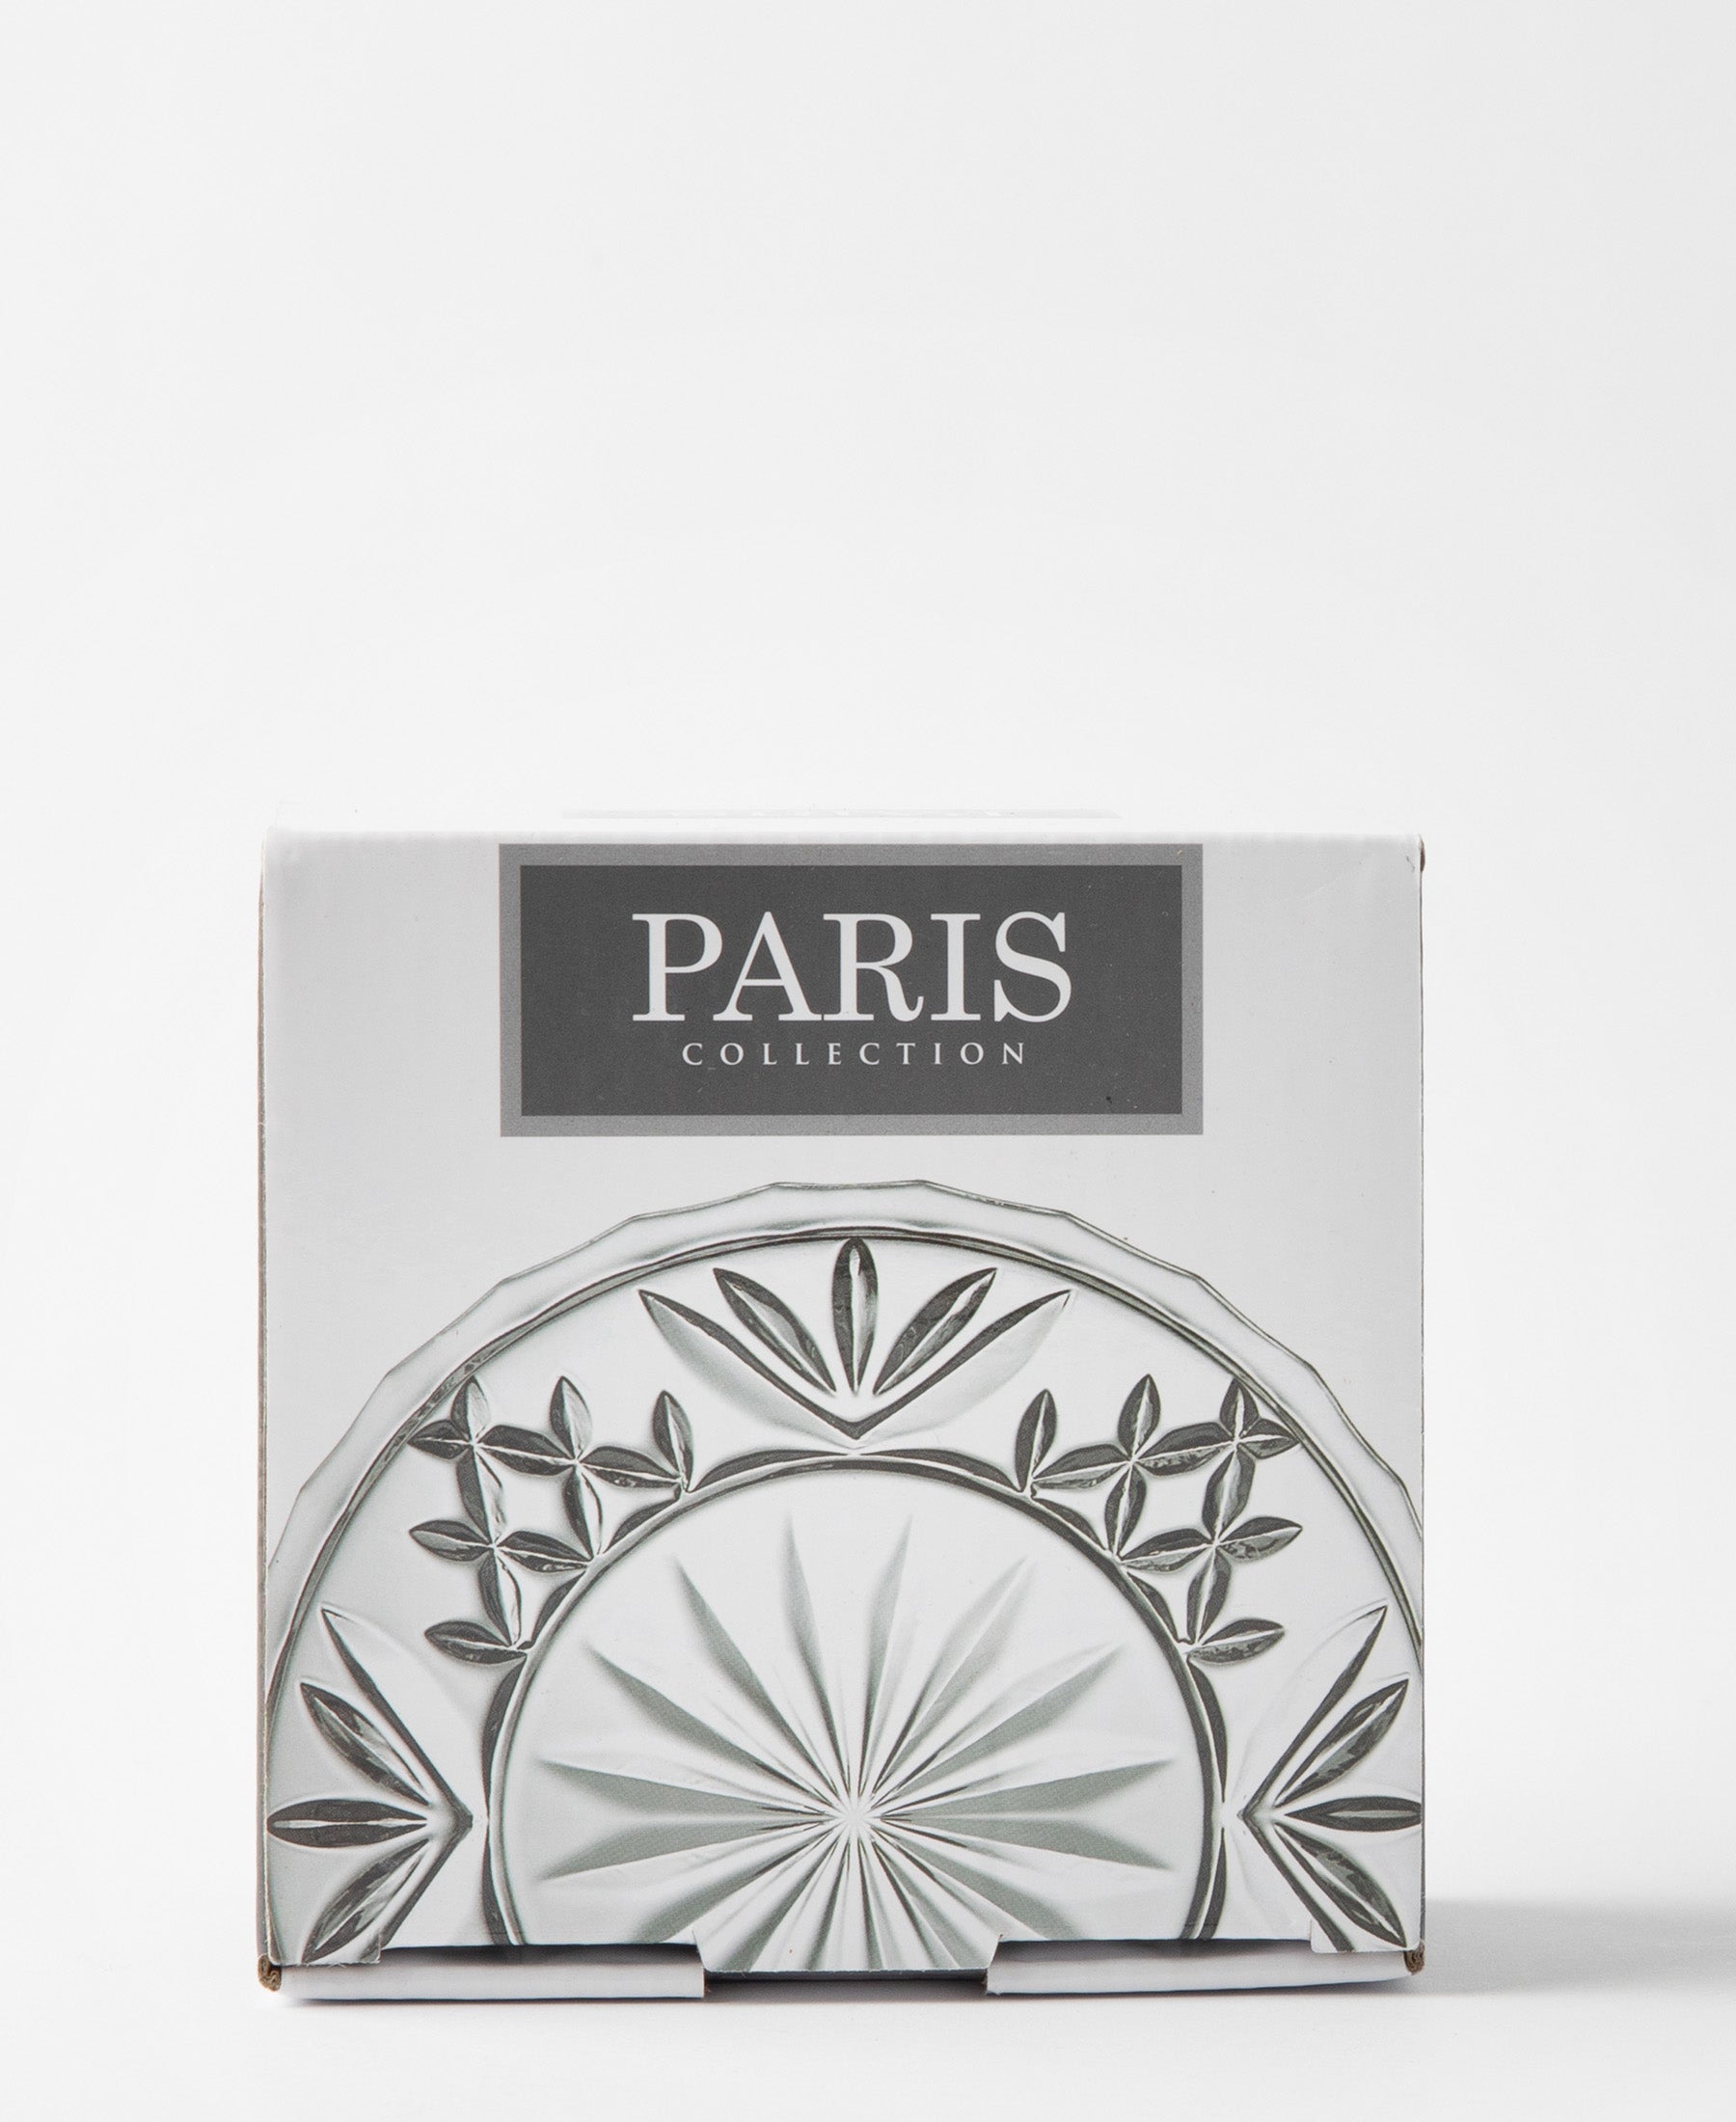 Paris Collection 4 Piece Coaster Set - Transparent